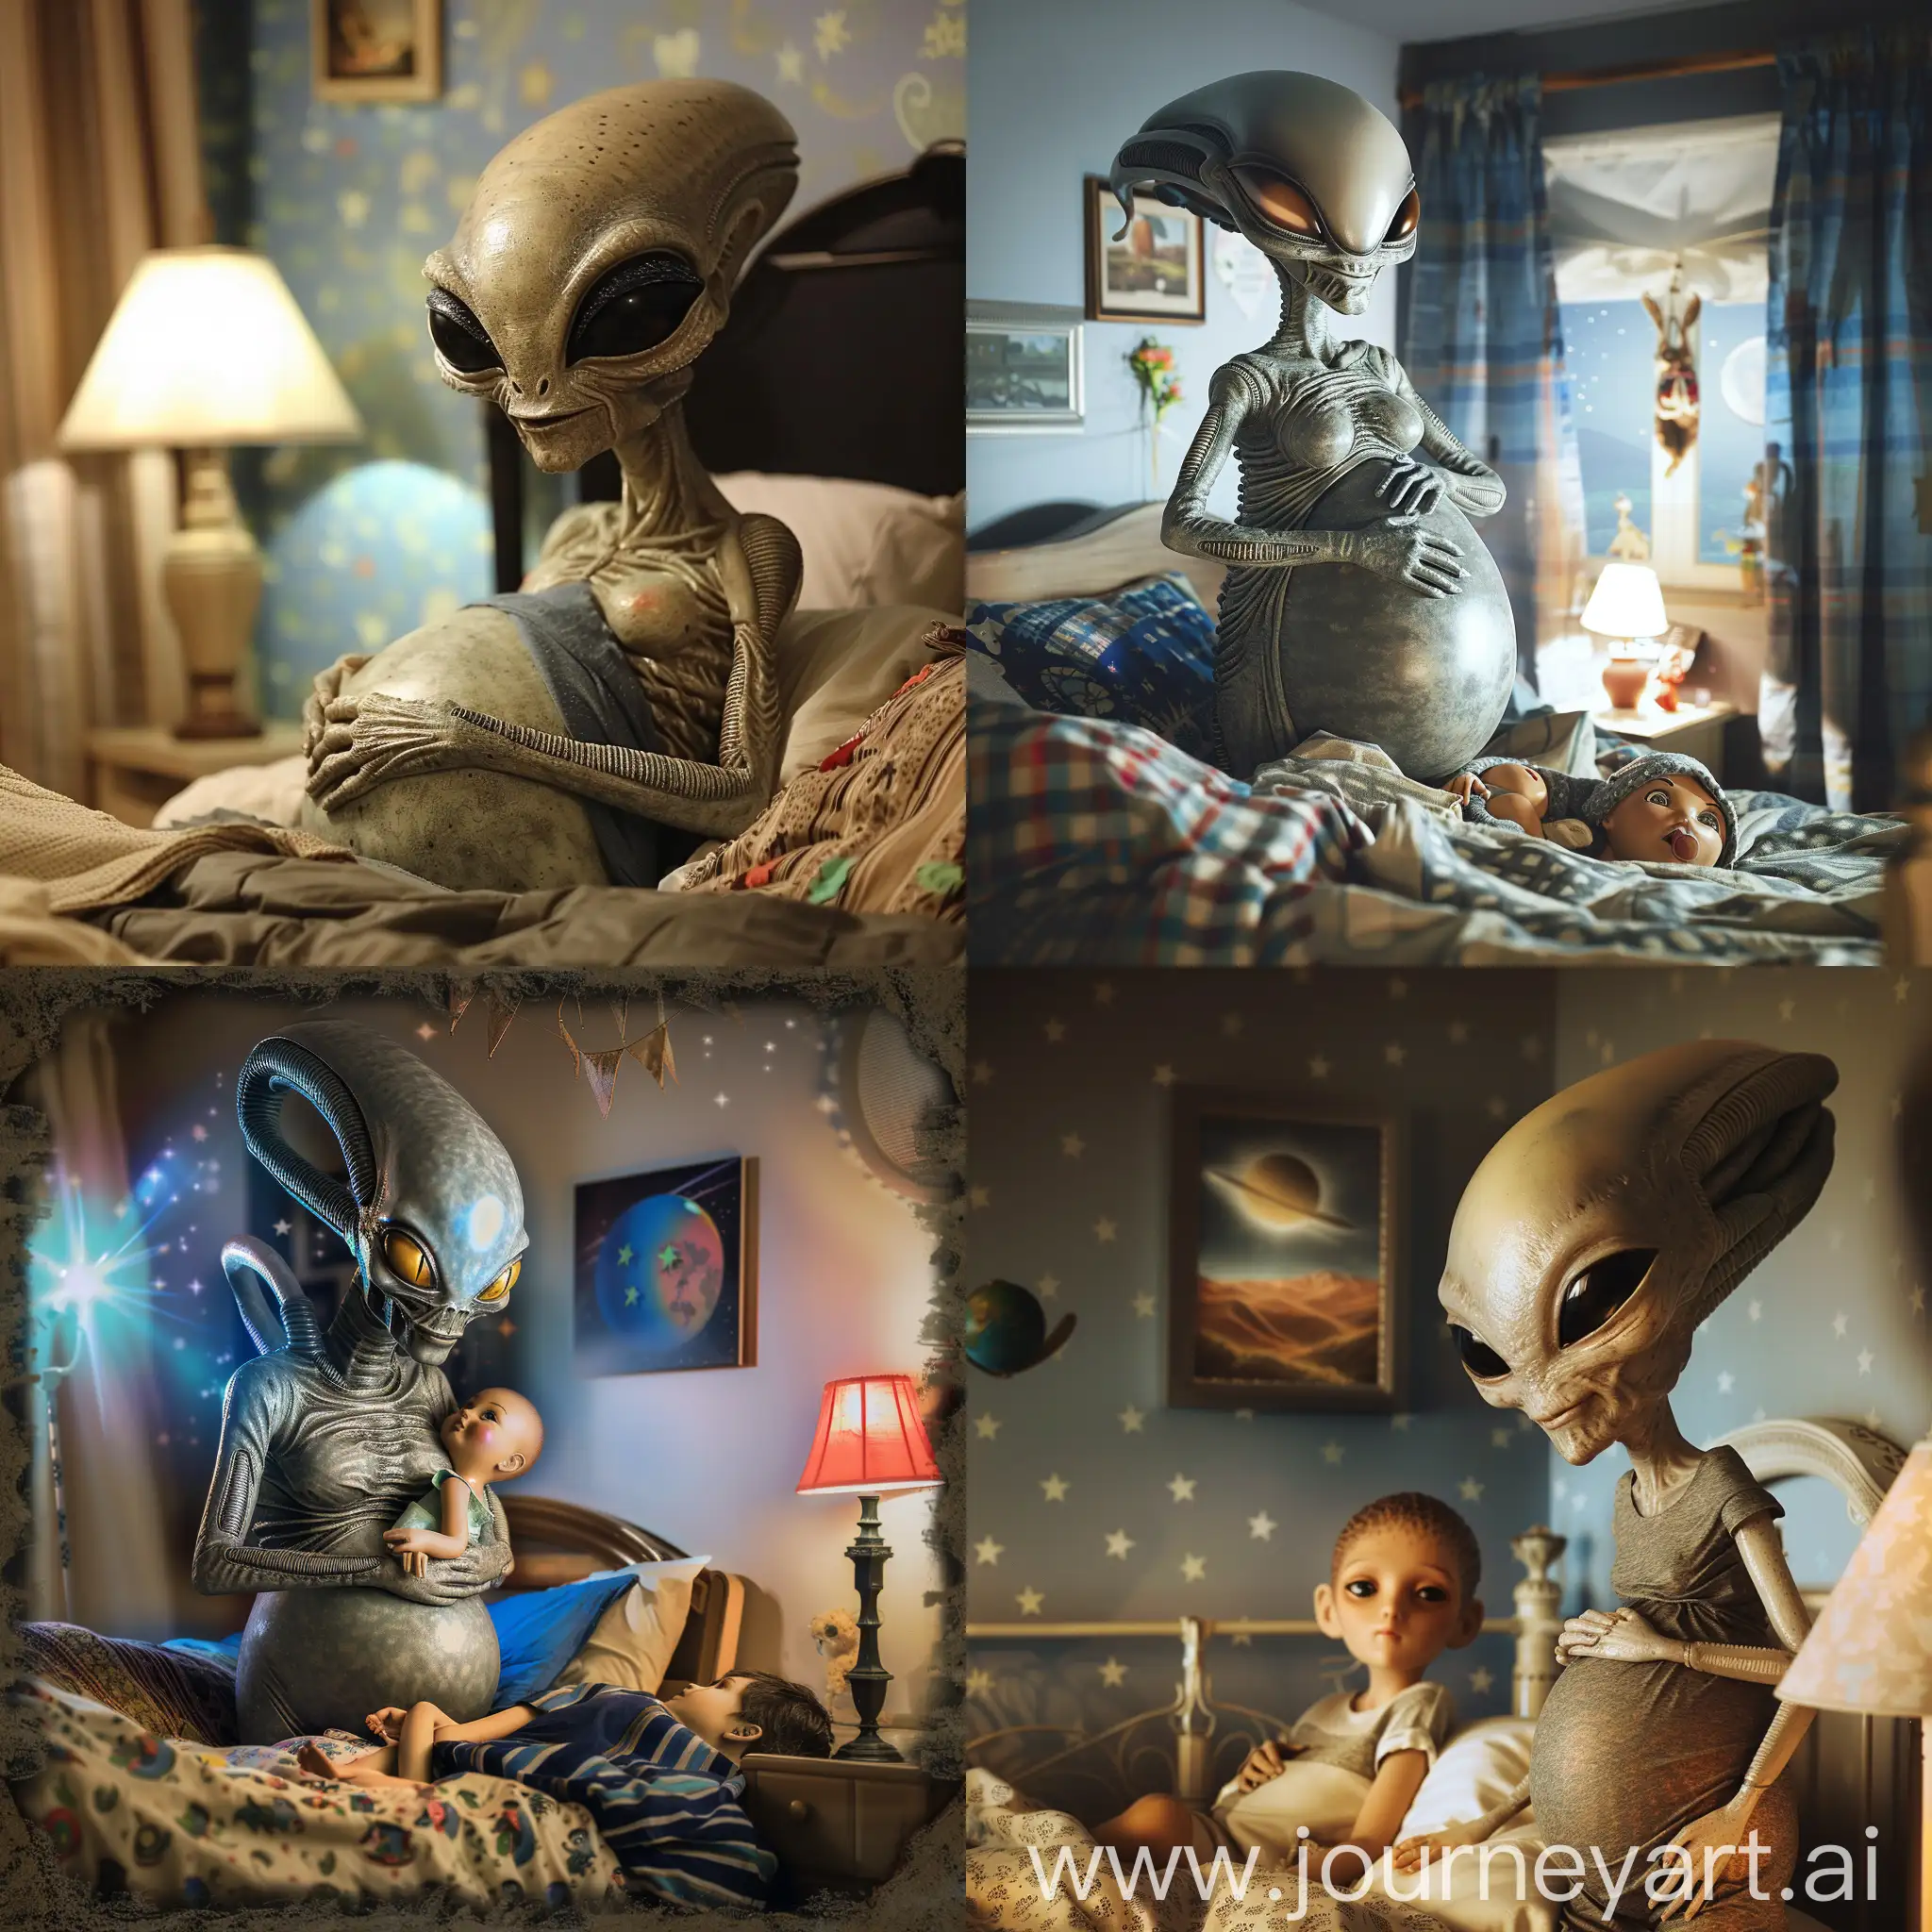 Pregnant-Gray-Alien-Lovingly-Tucks-Human-into-Bed-at-Night